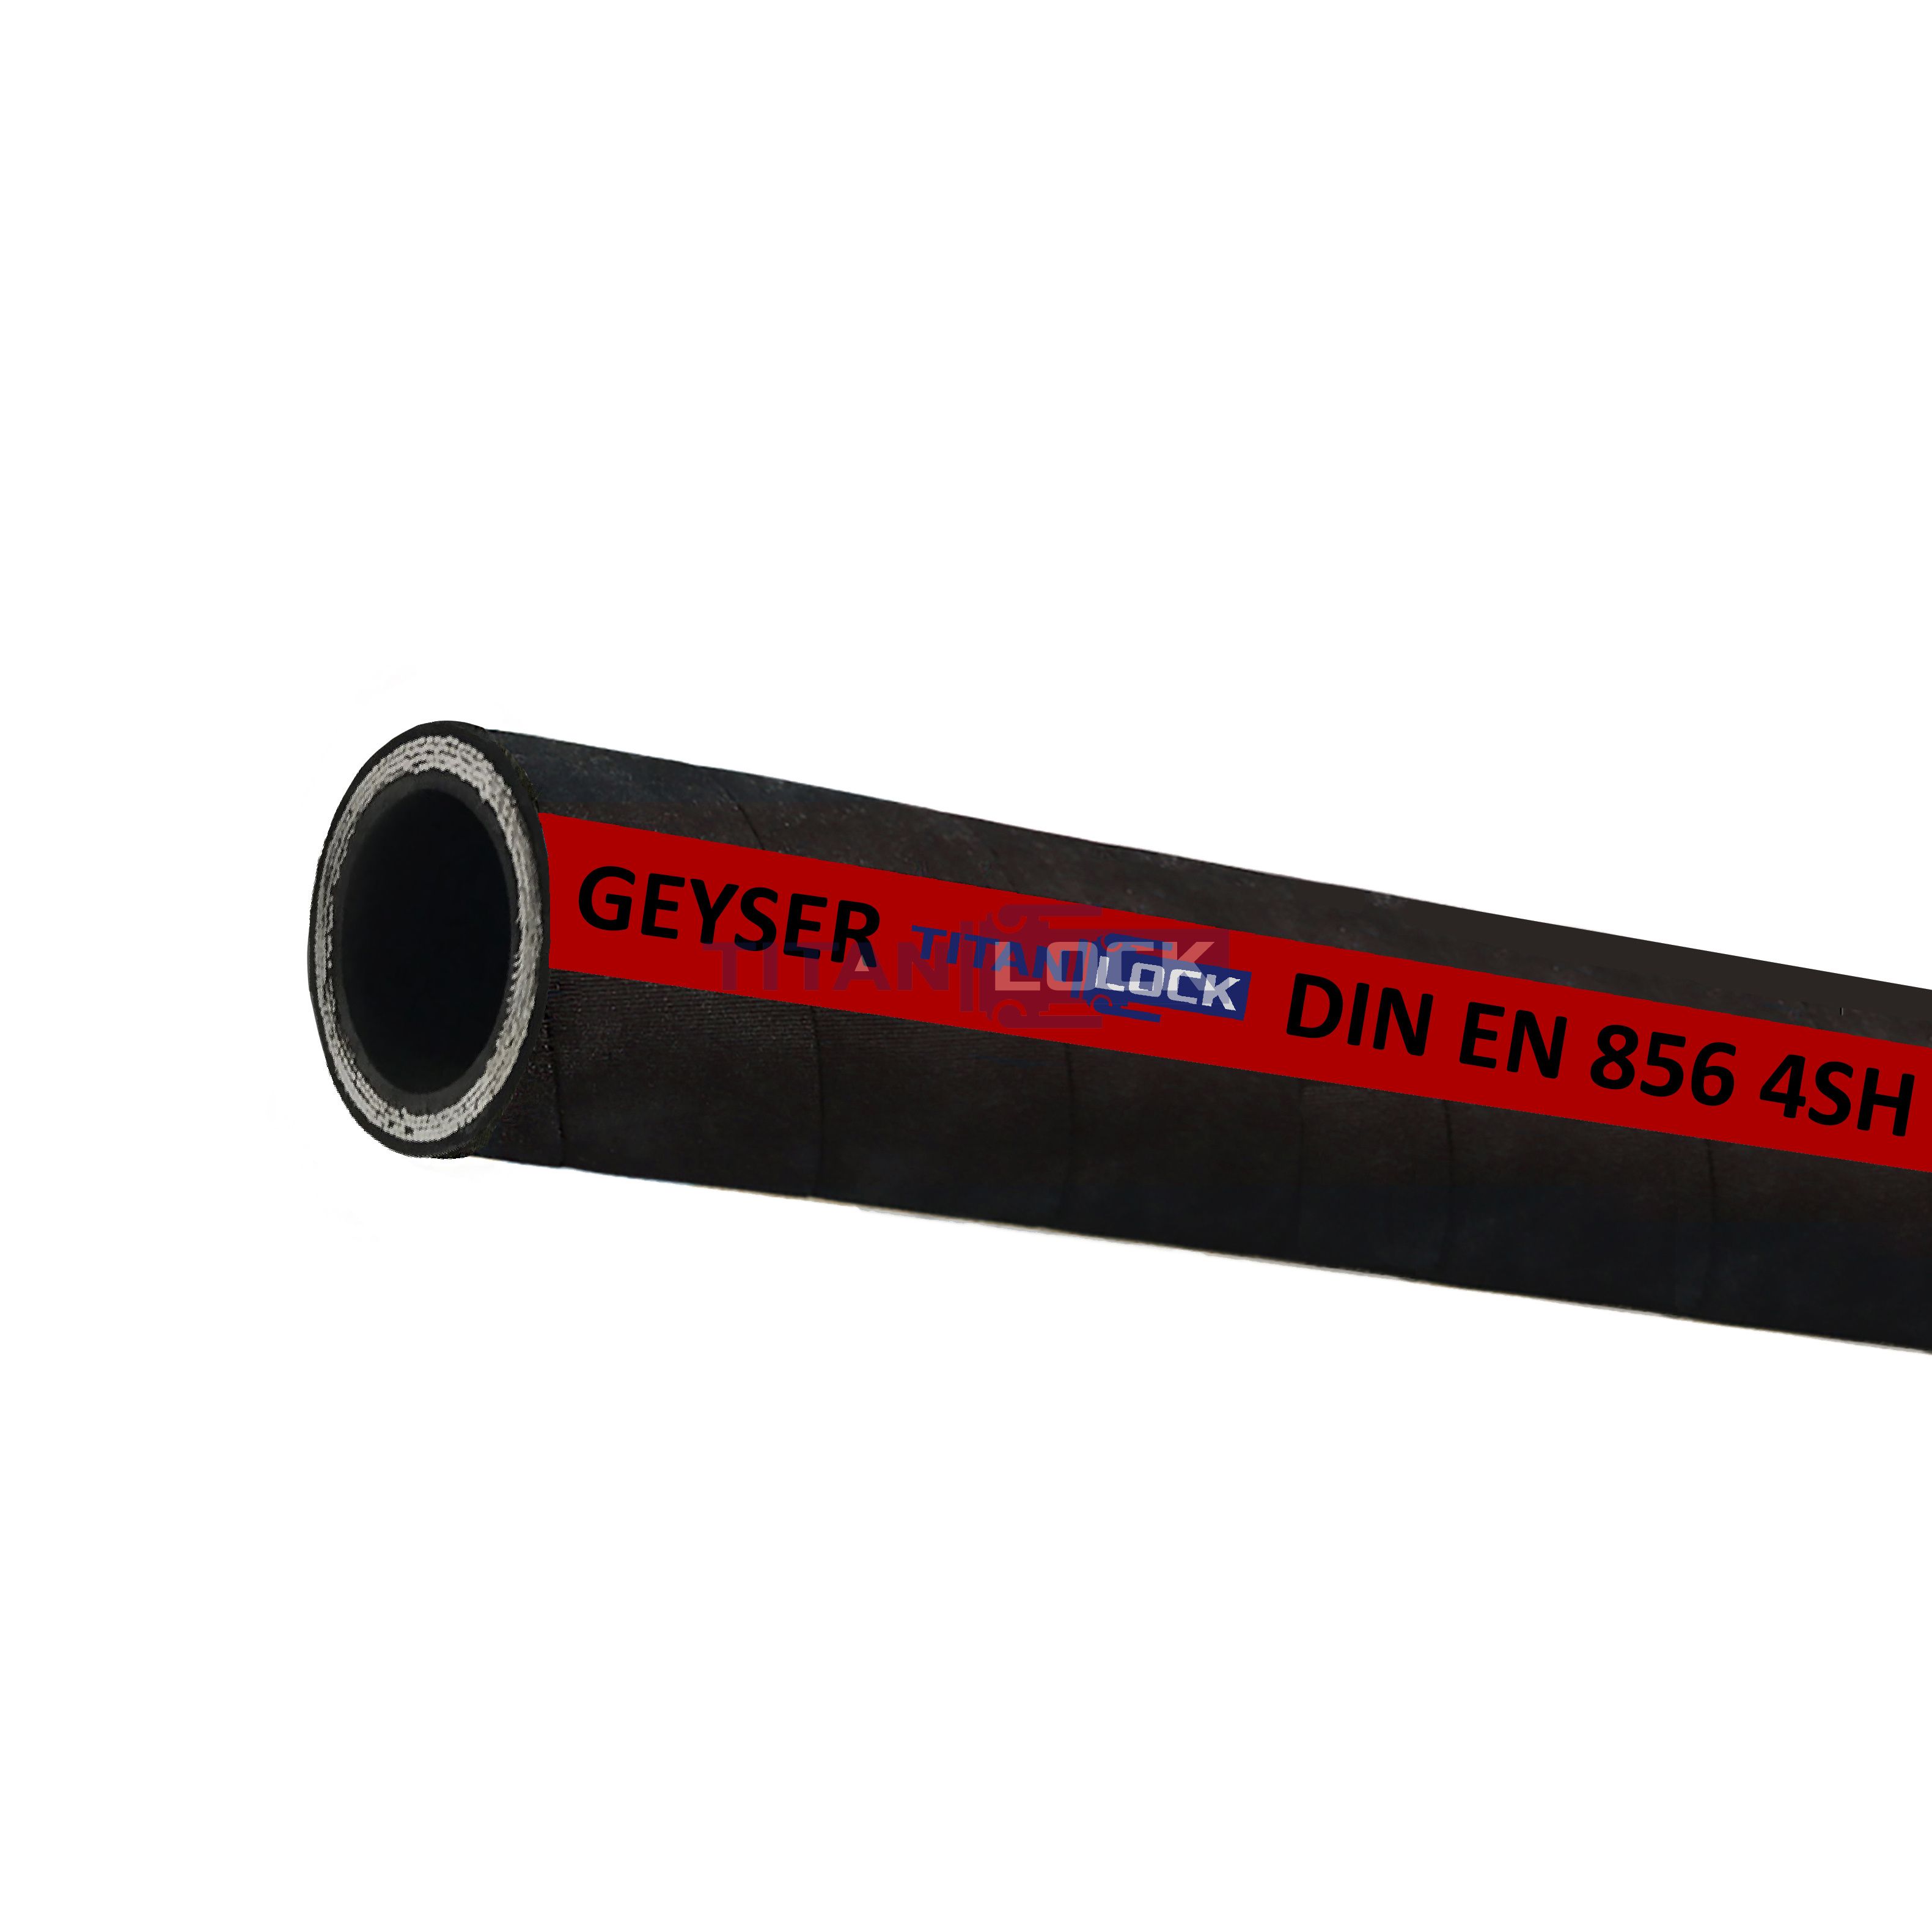 4Рукав высокого давления GEYSER 4SH EN856, внутр.диам. 19мм, TLGY020-4SH TITAN LOCK